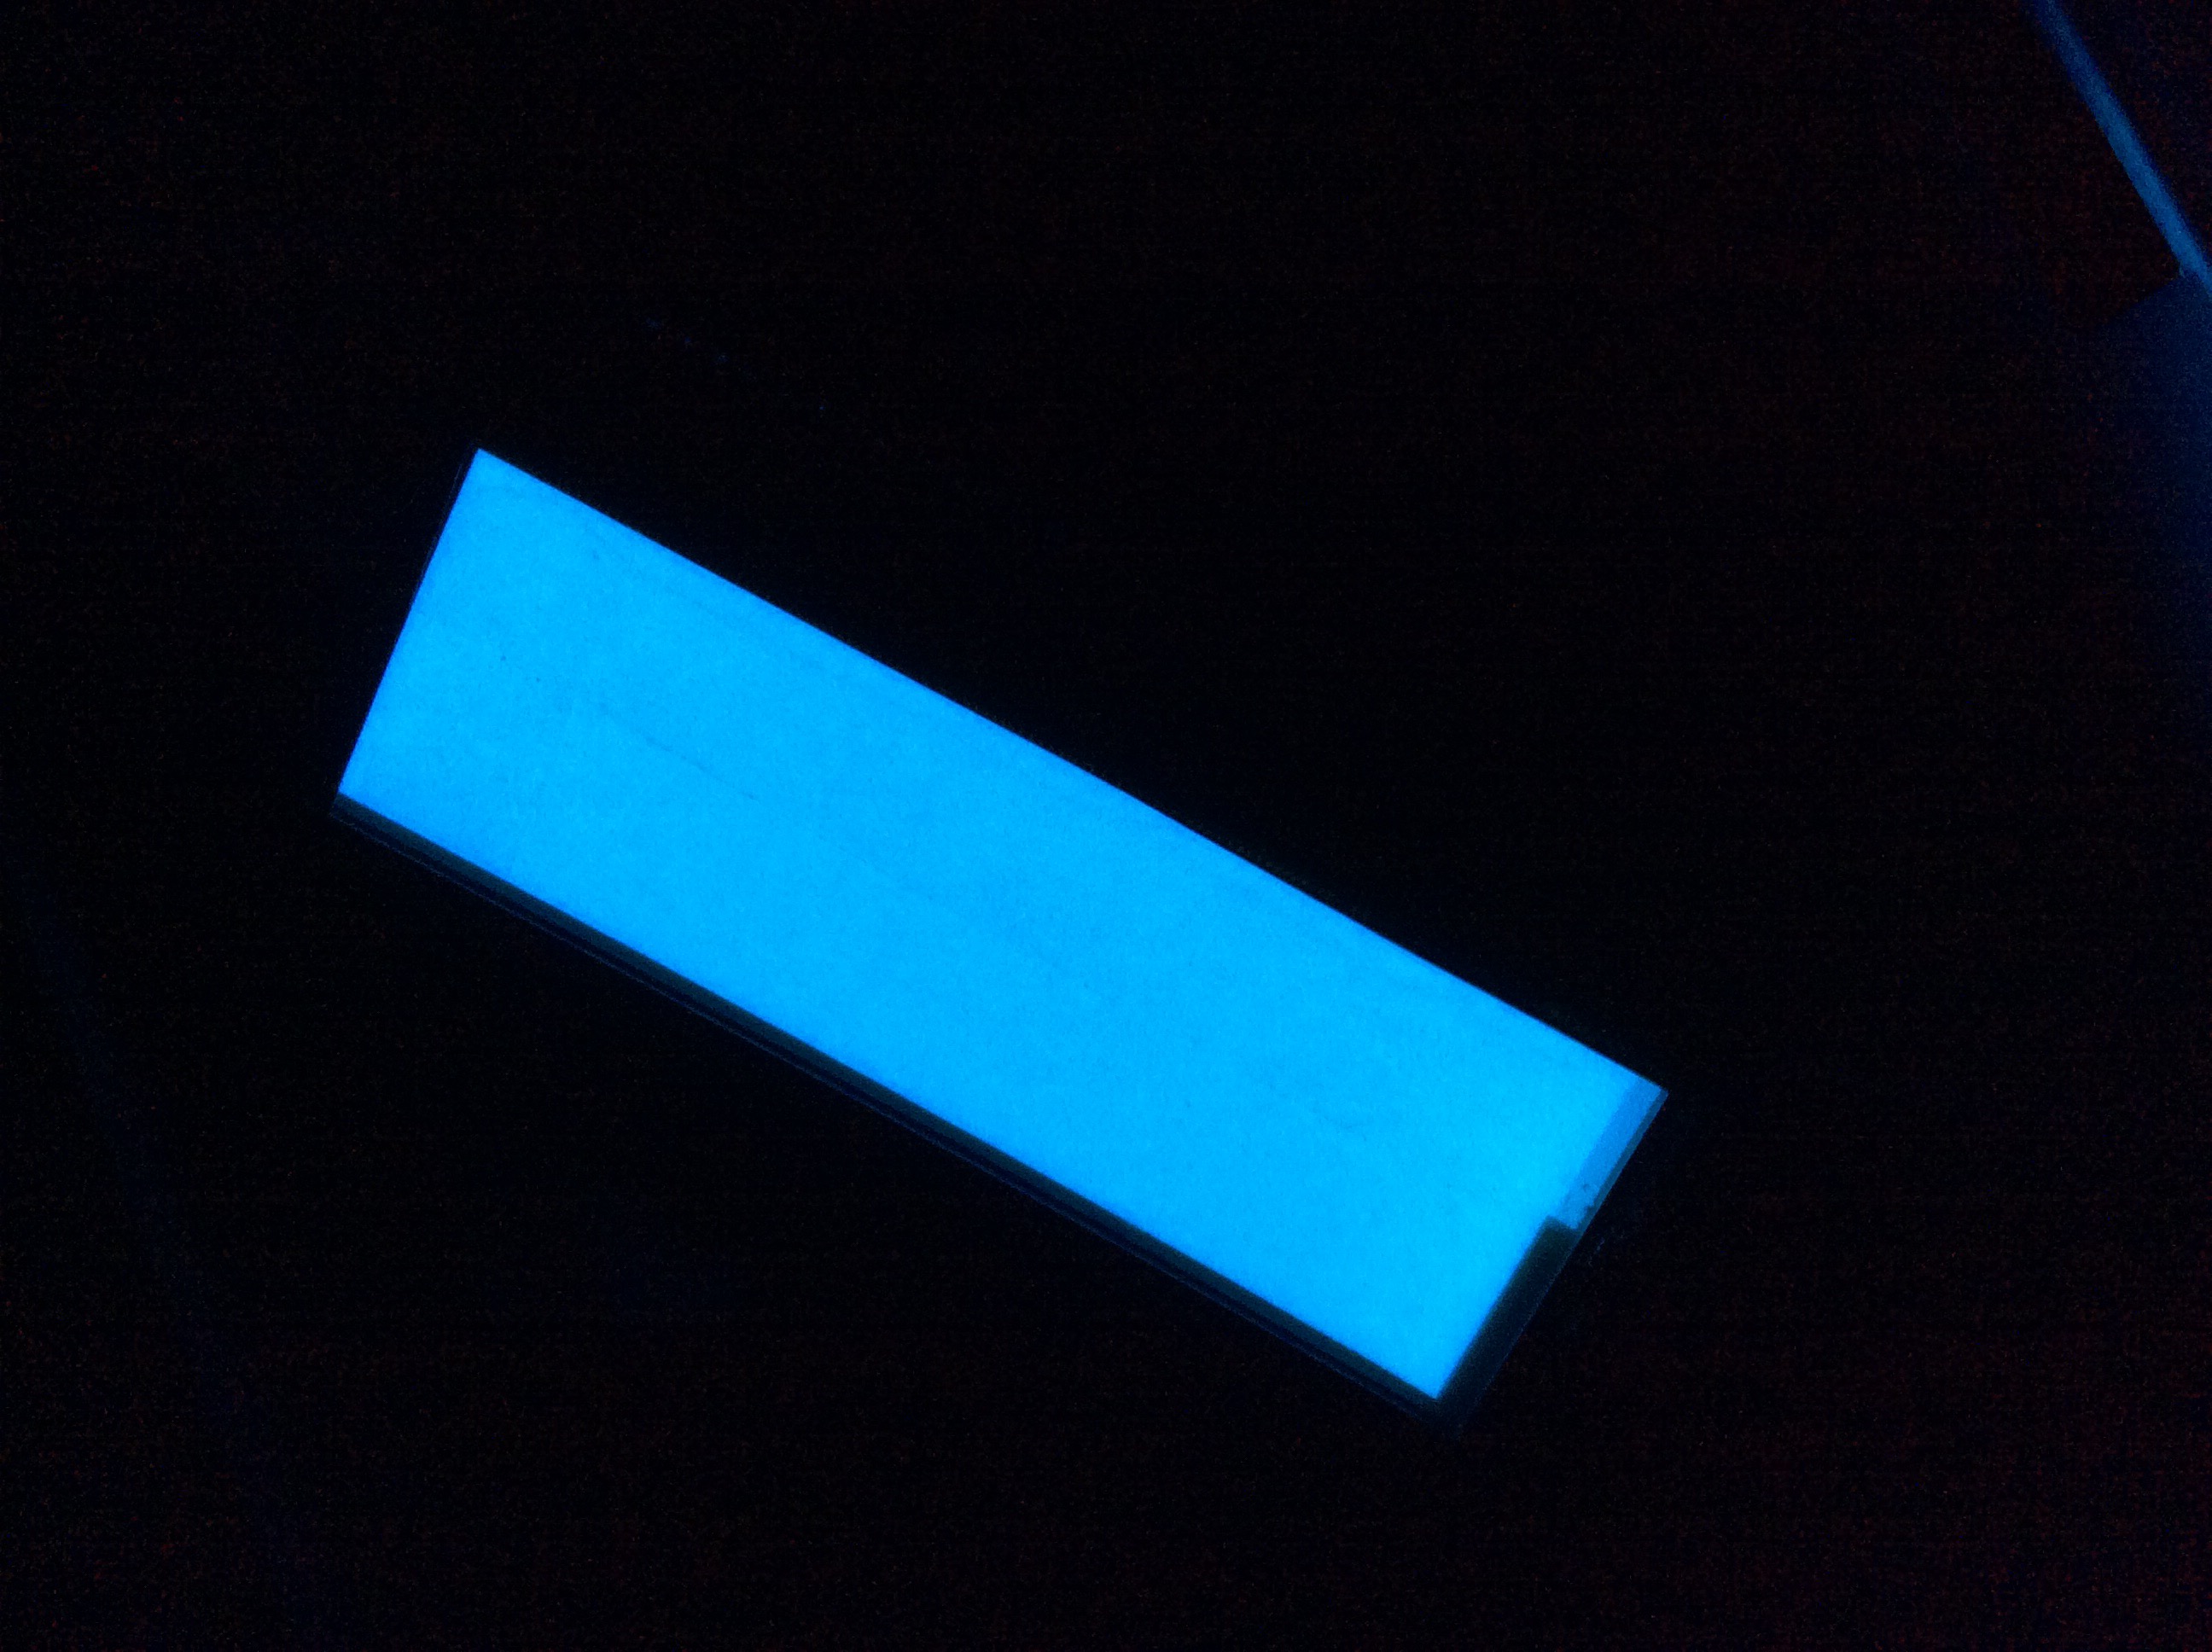 EL backlight glowing blue